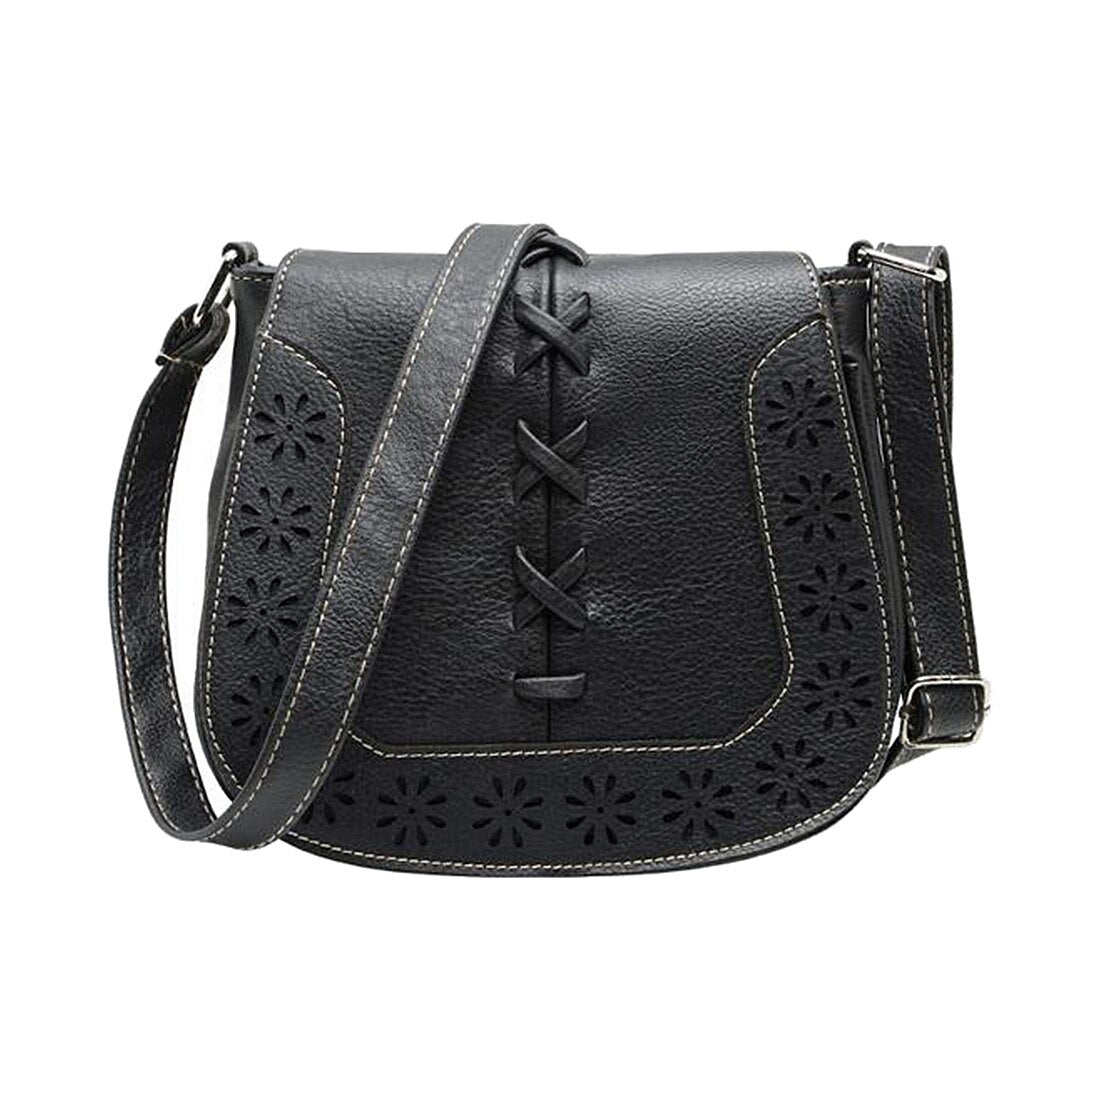 Hot Fashion Women Leather Handbags Retro Hollow Out Crossbody Shoulder Bag Hollow Out Lady Vintage Bag bags Black - ebowsos